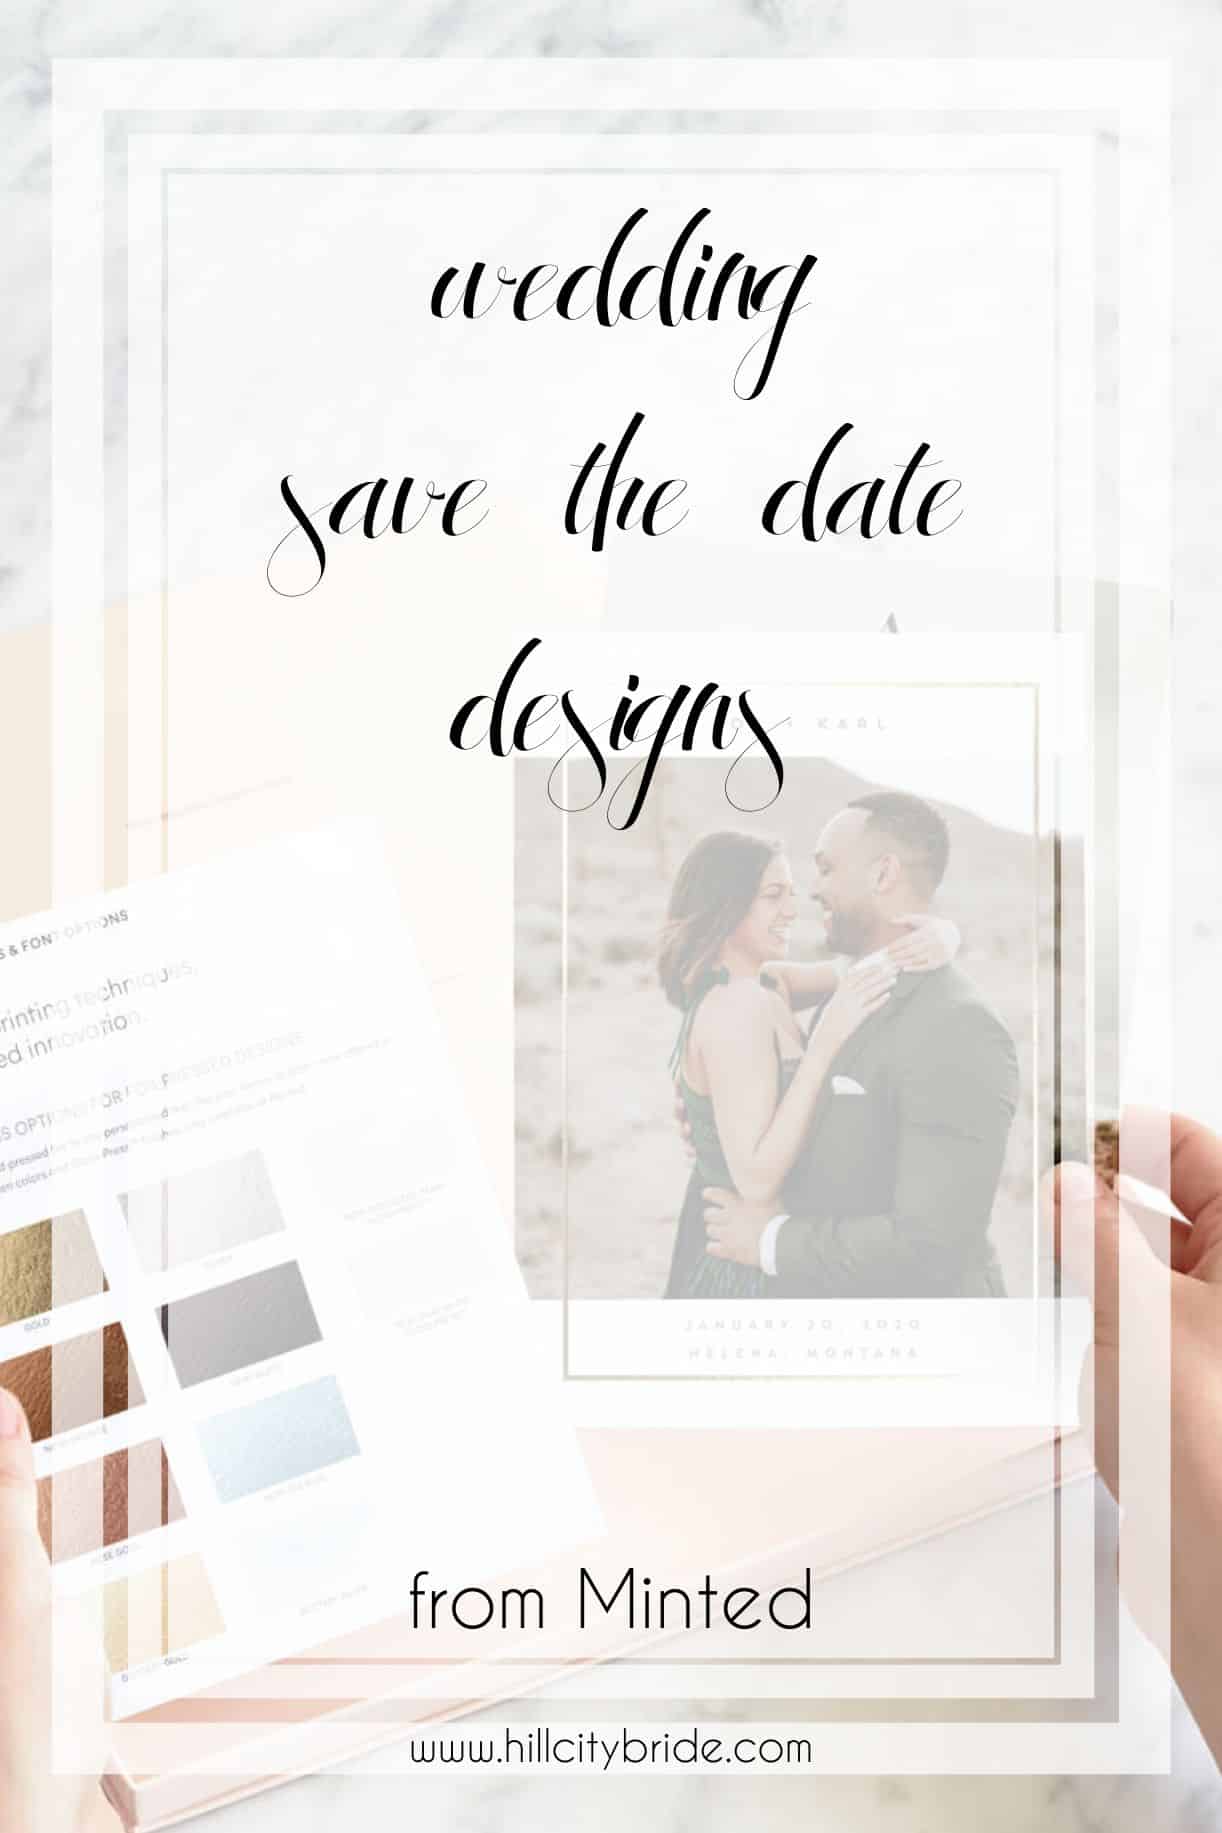 Wedding Save the Date Designs | Hill City Bride Virginia Weddings Blog Minted Wedding Invitations